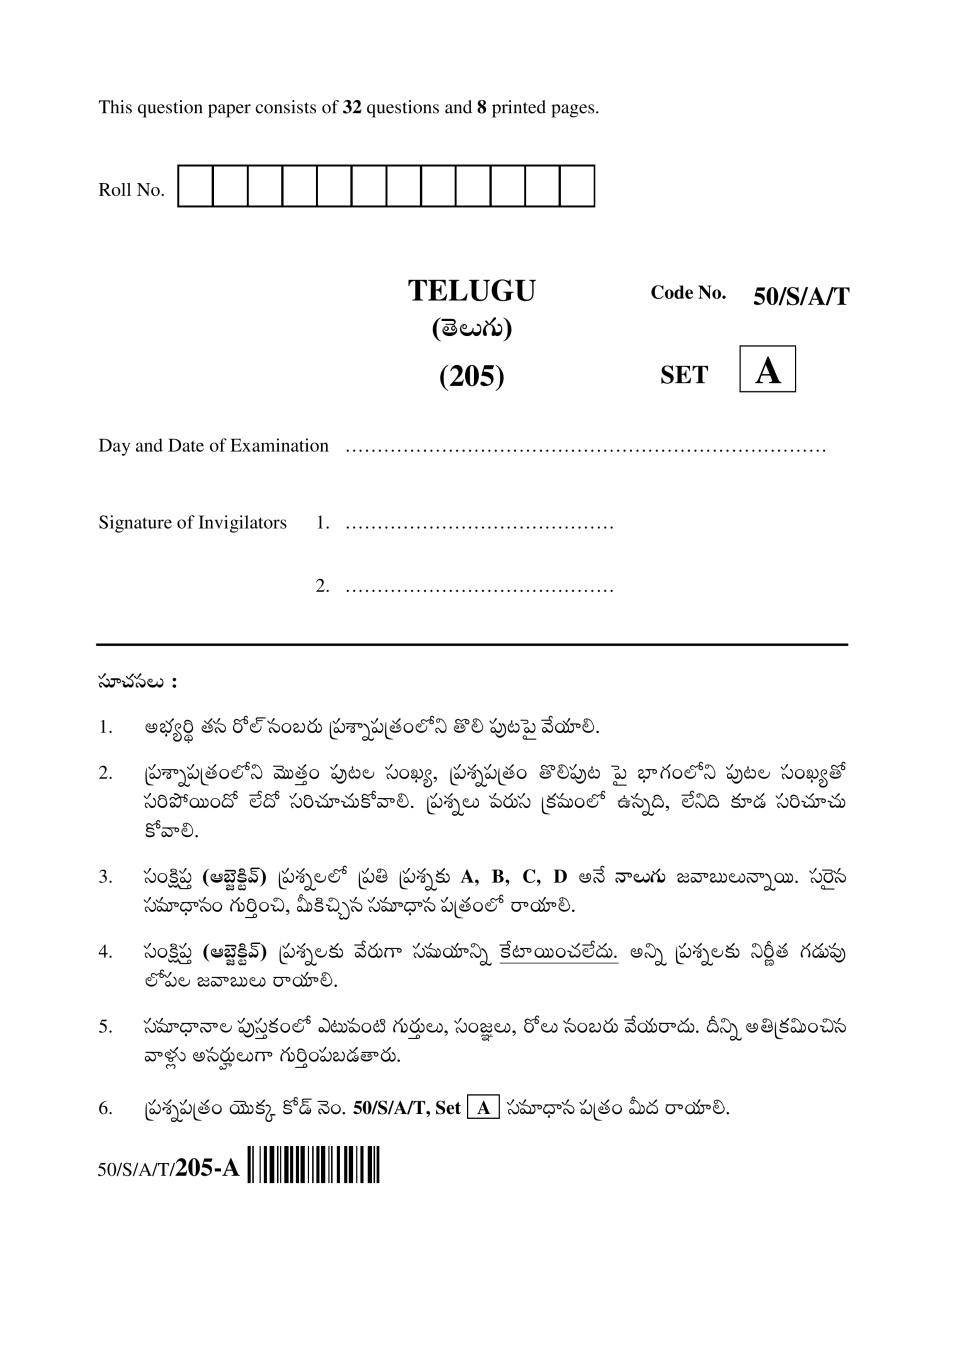 NIOS Class 10 Question Paper Apr 2015 - Telugu - Page 1